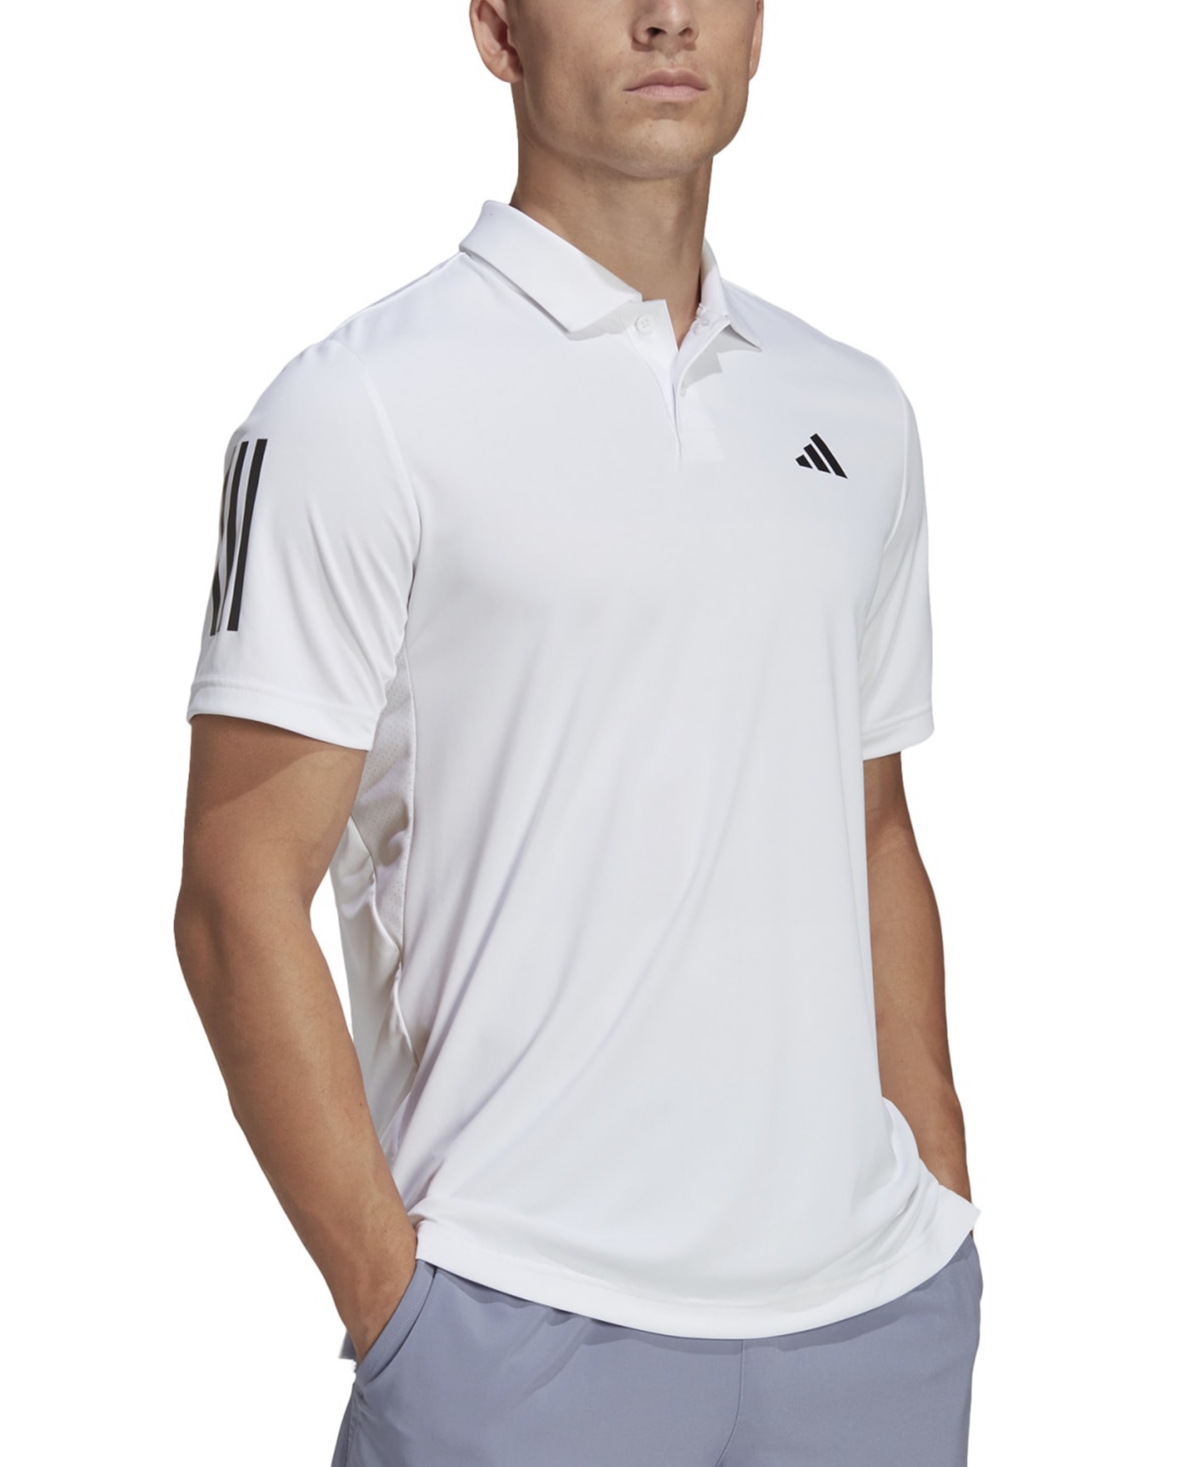 Adidas Originals Men's 3-stripes Short Sleeve Performance Club Tennis Polo Shirt In White